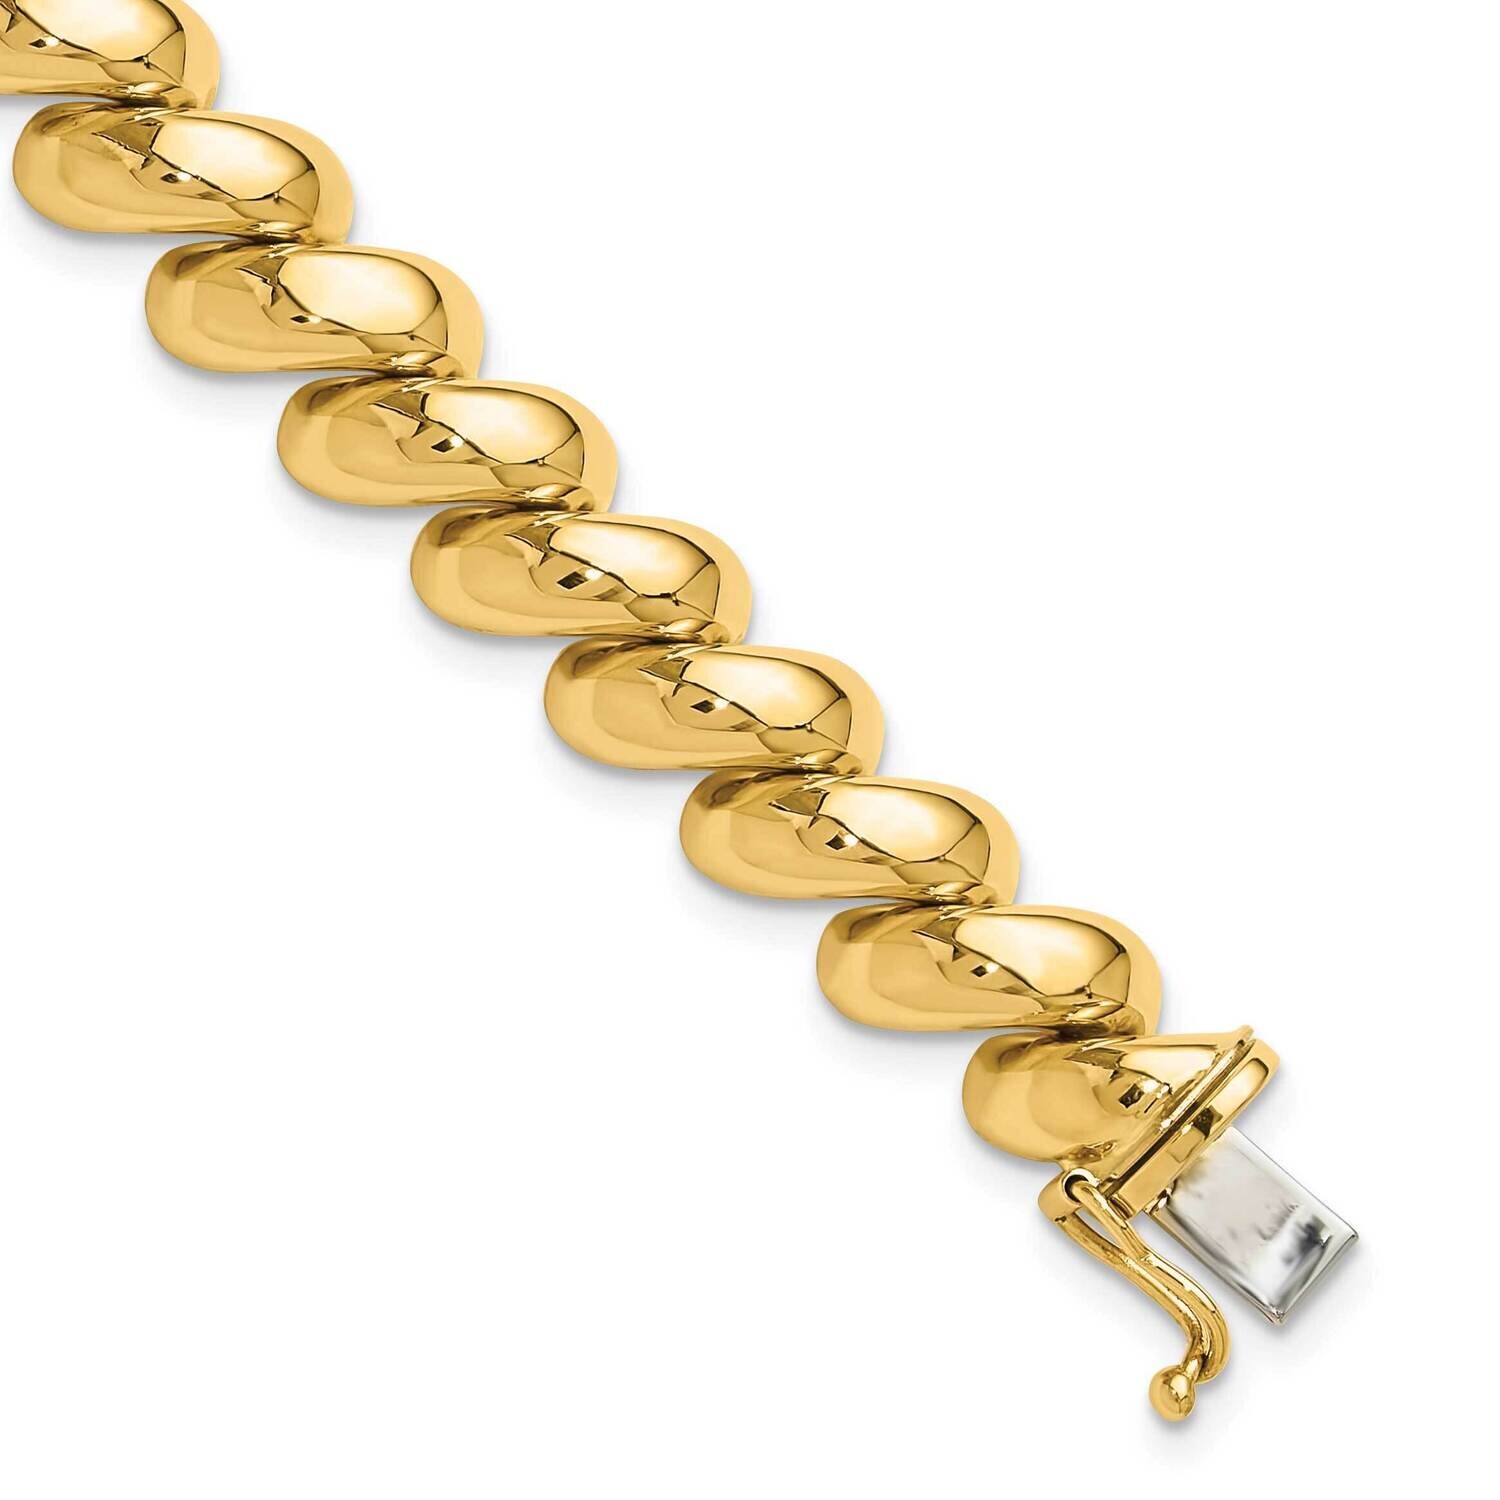 San Marco Bracelet 7 Inch 10k Gold 10SM16-7